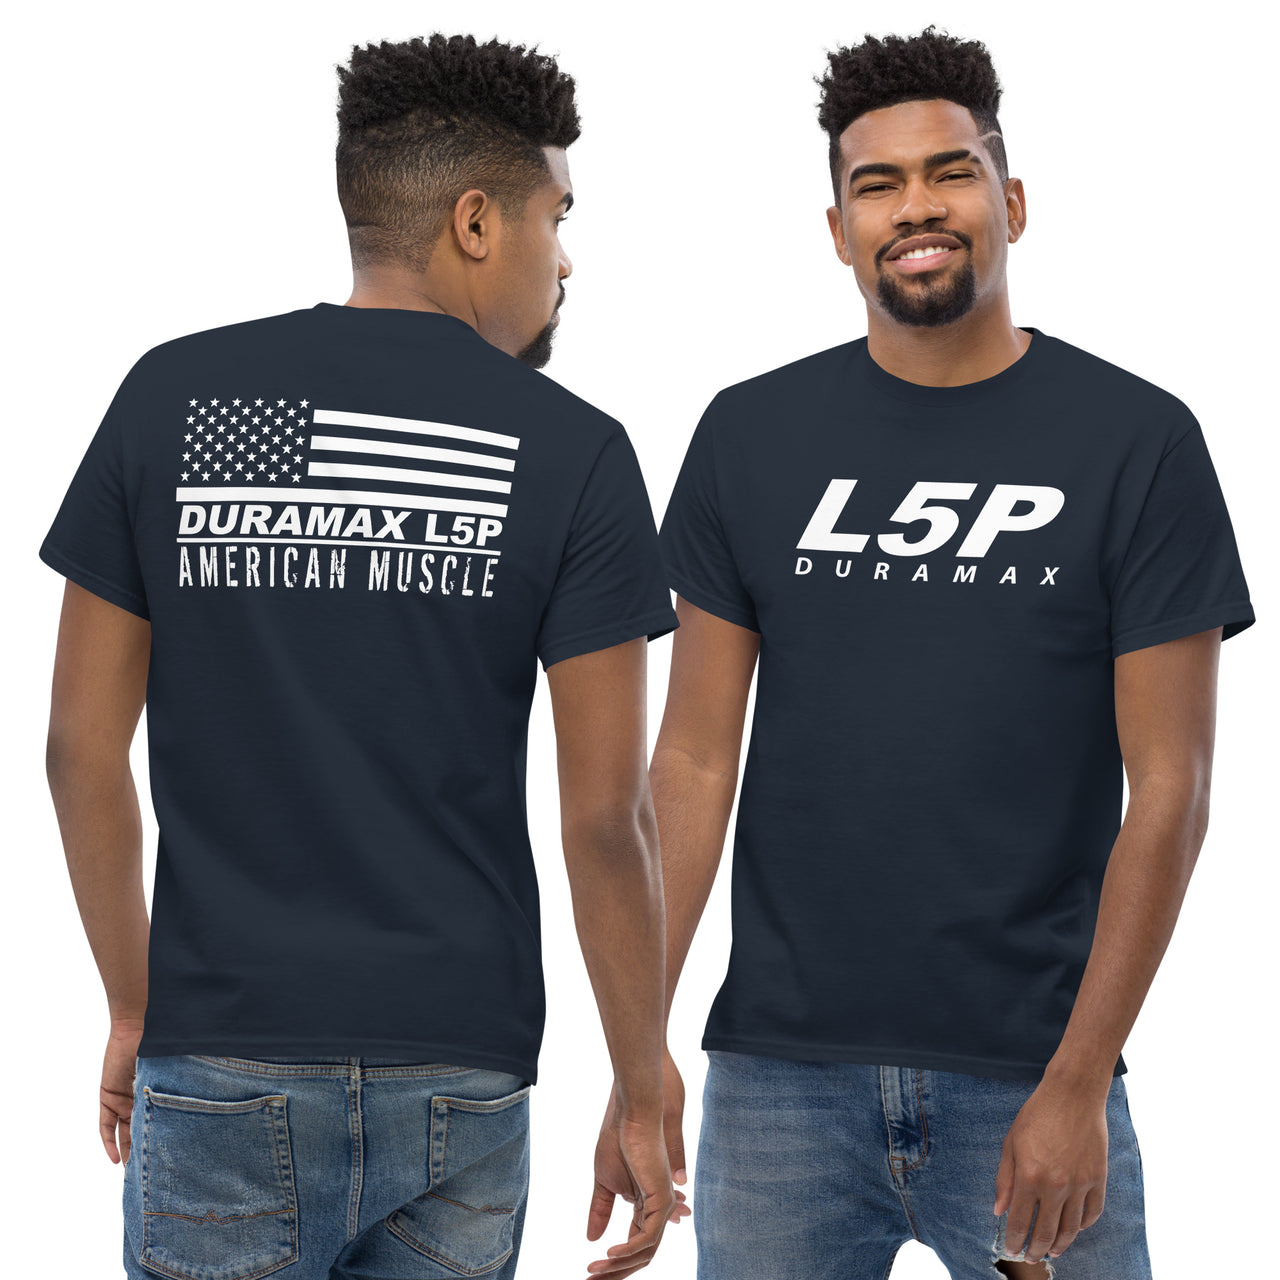 L5P Duramax Shirt Mens Diesel Truck Shirt modeled in navy